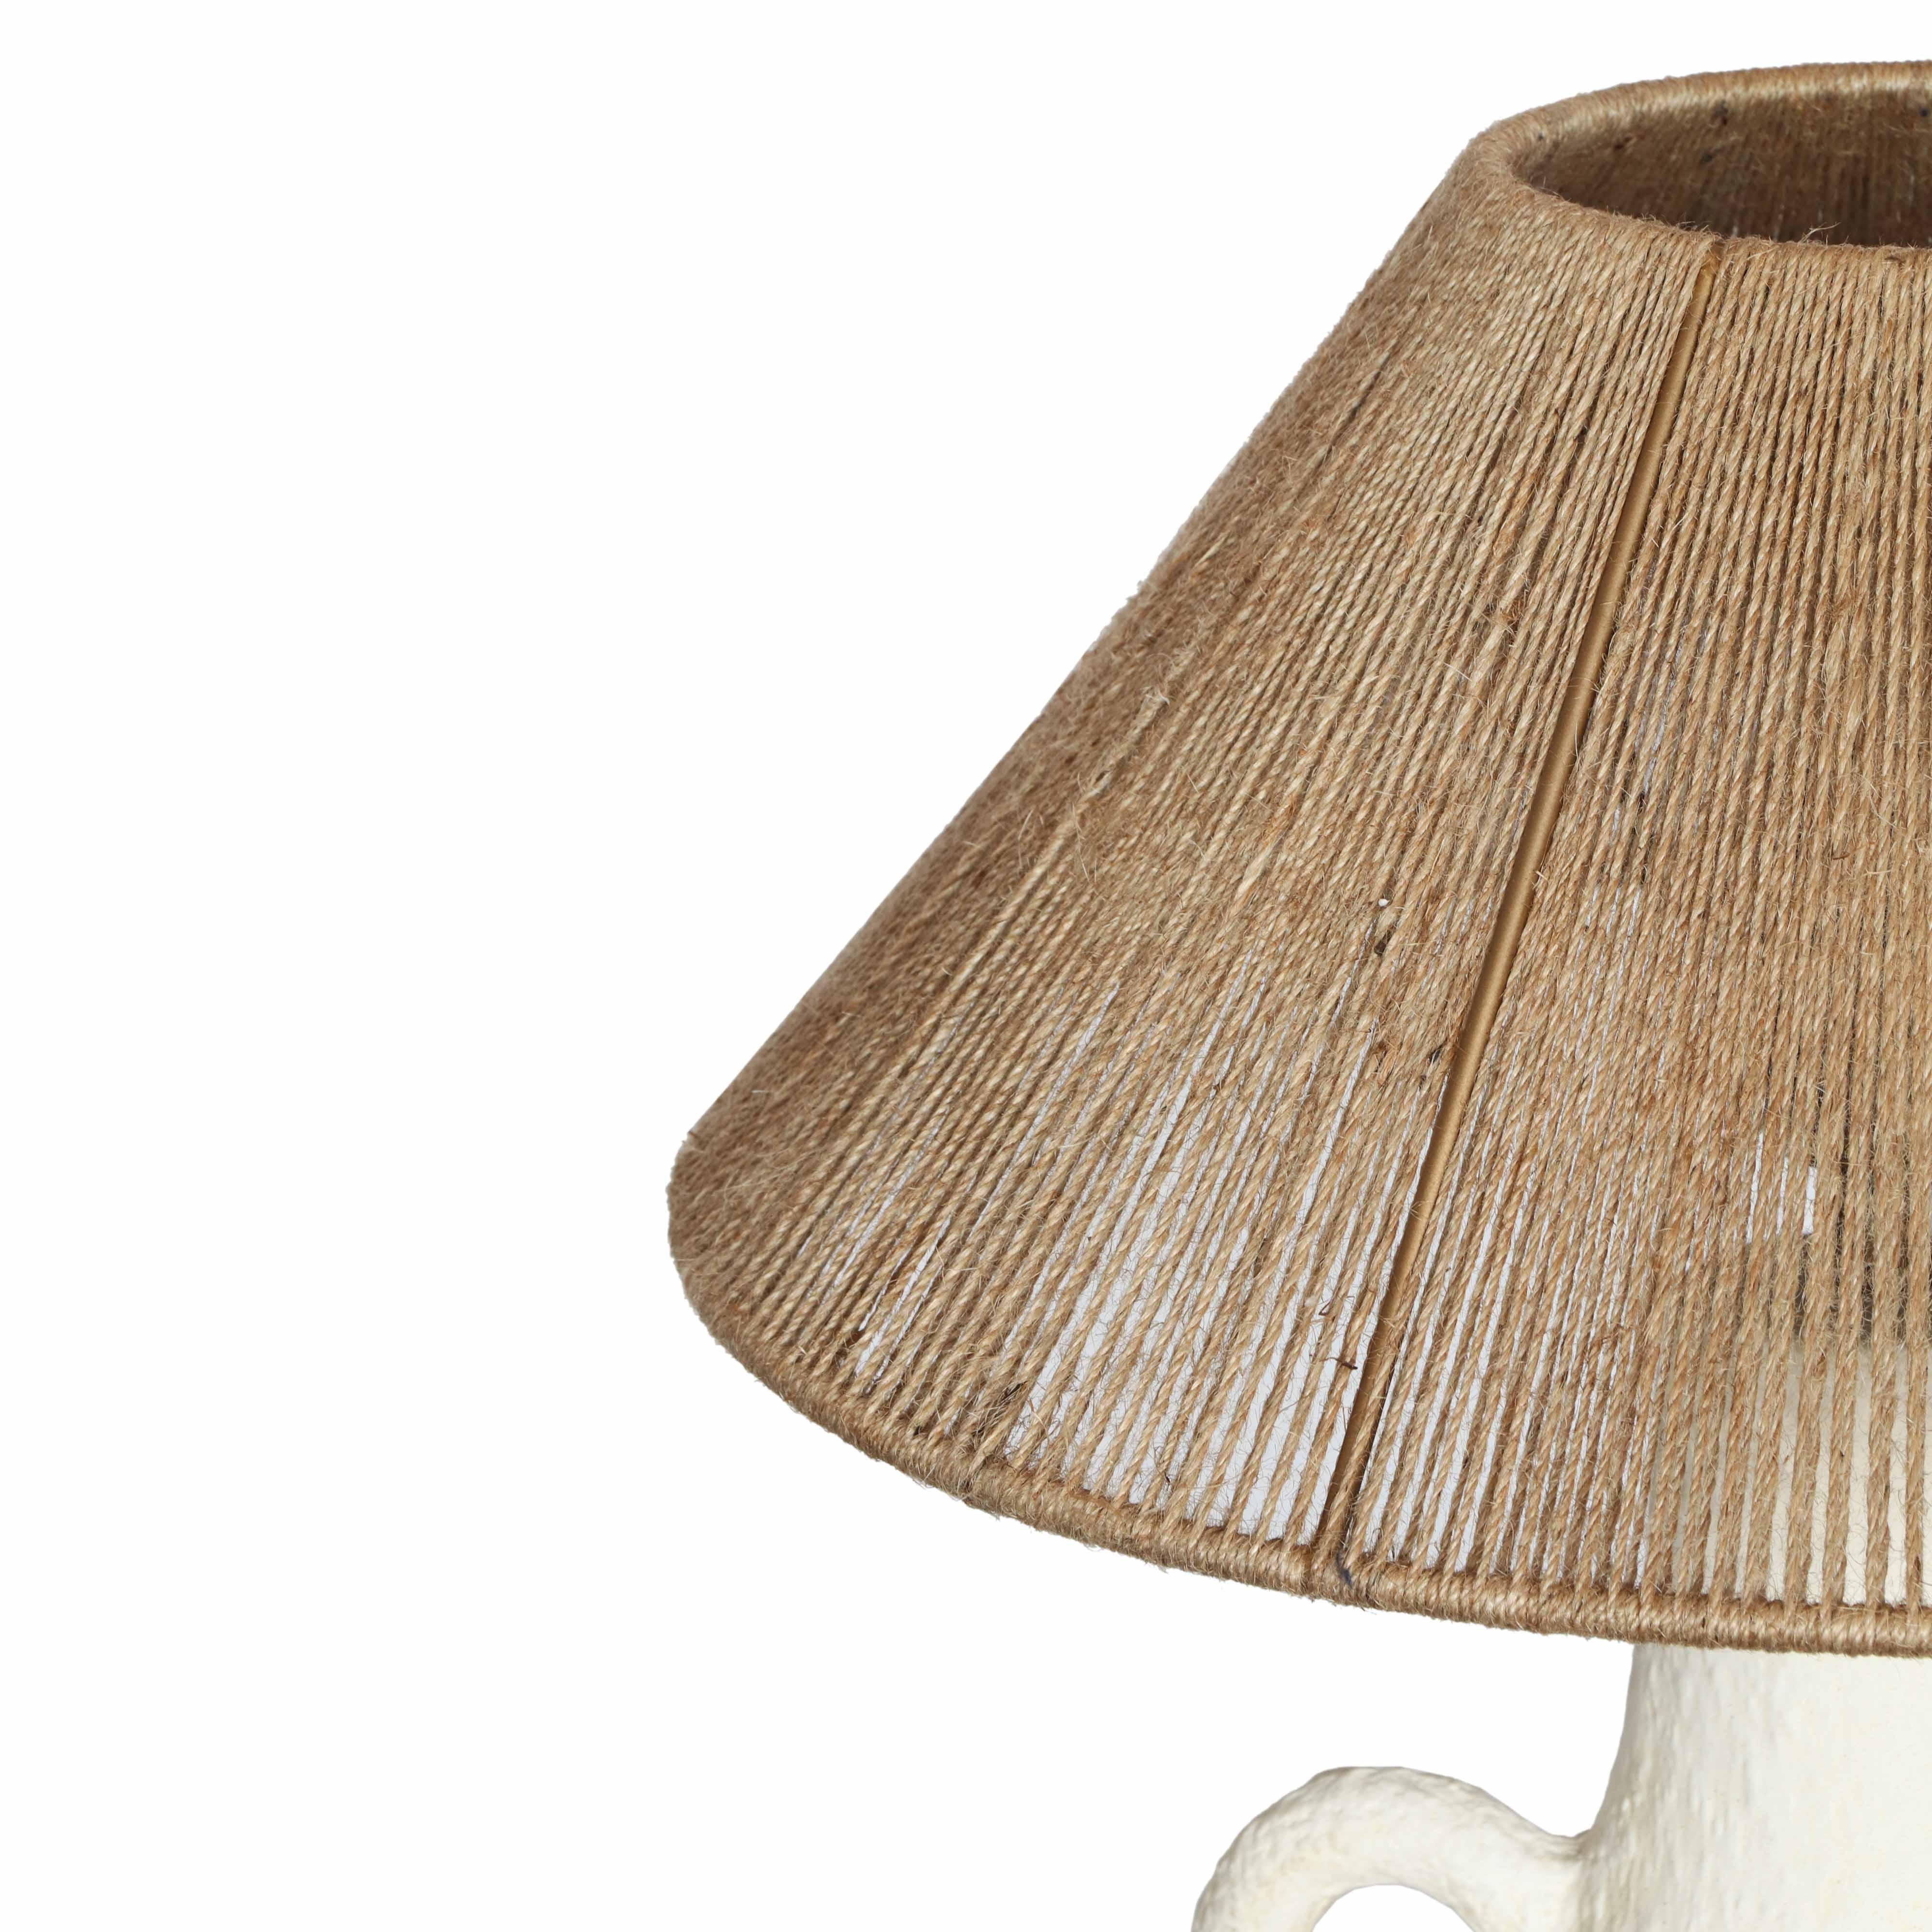 Lalit Natural & White Ceramic Table Lamp - Image 2